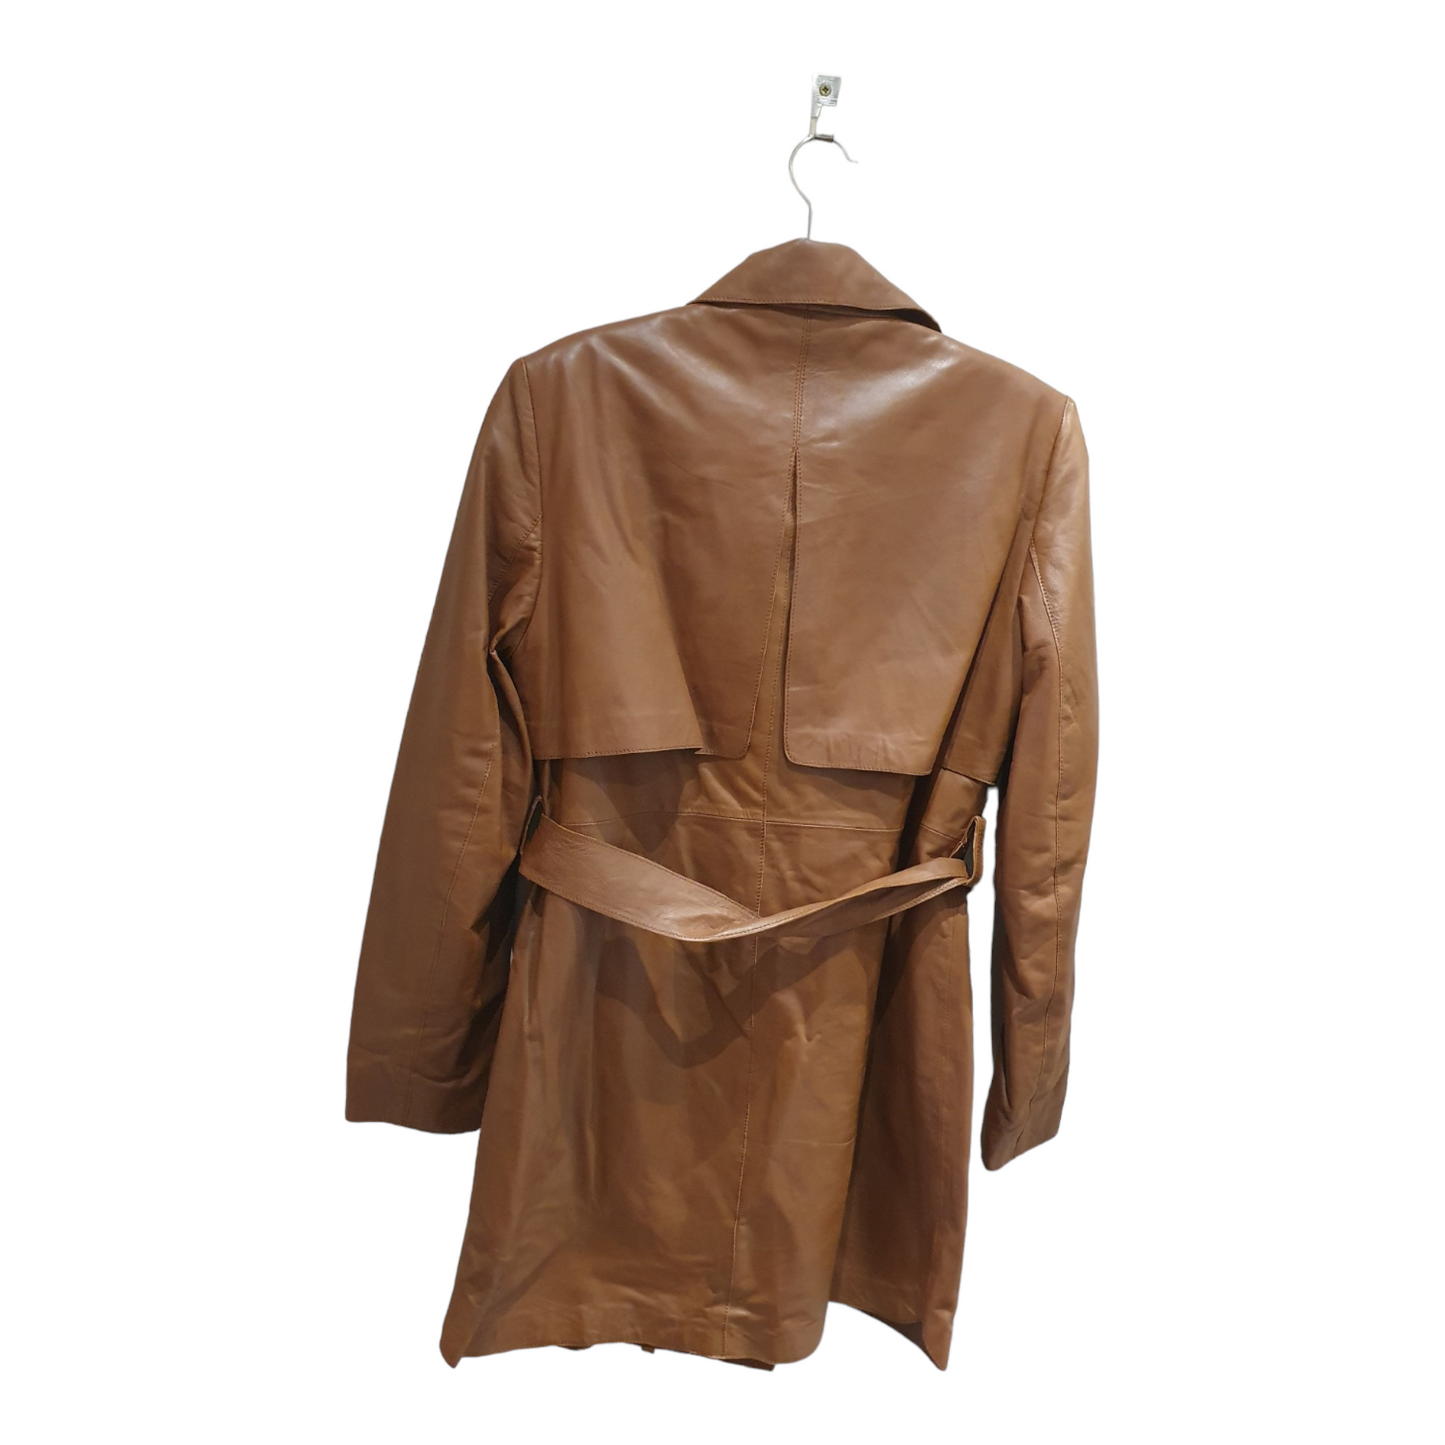 Cigno Nero cognac leather coat, size 10